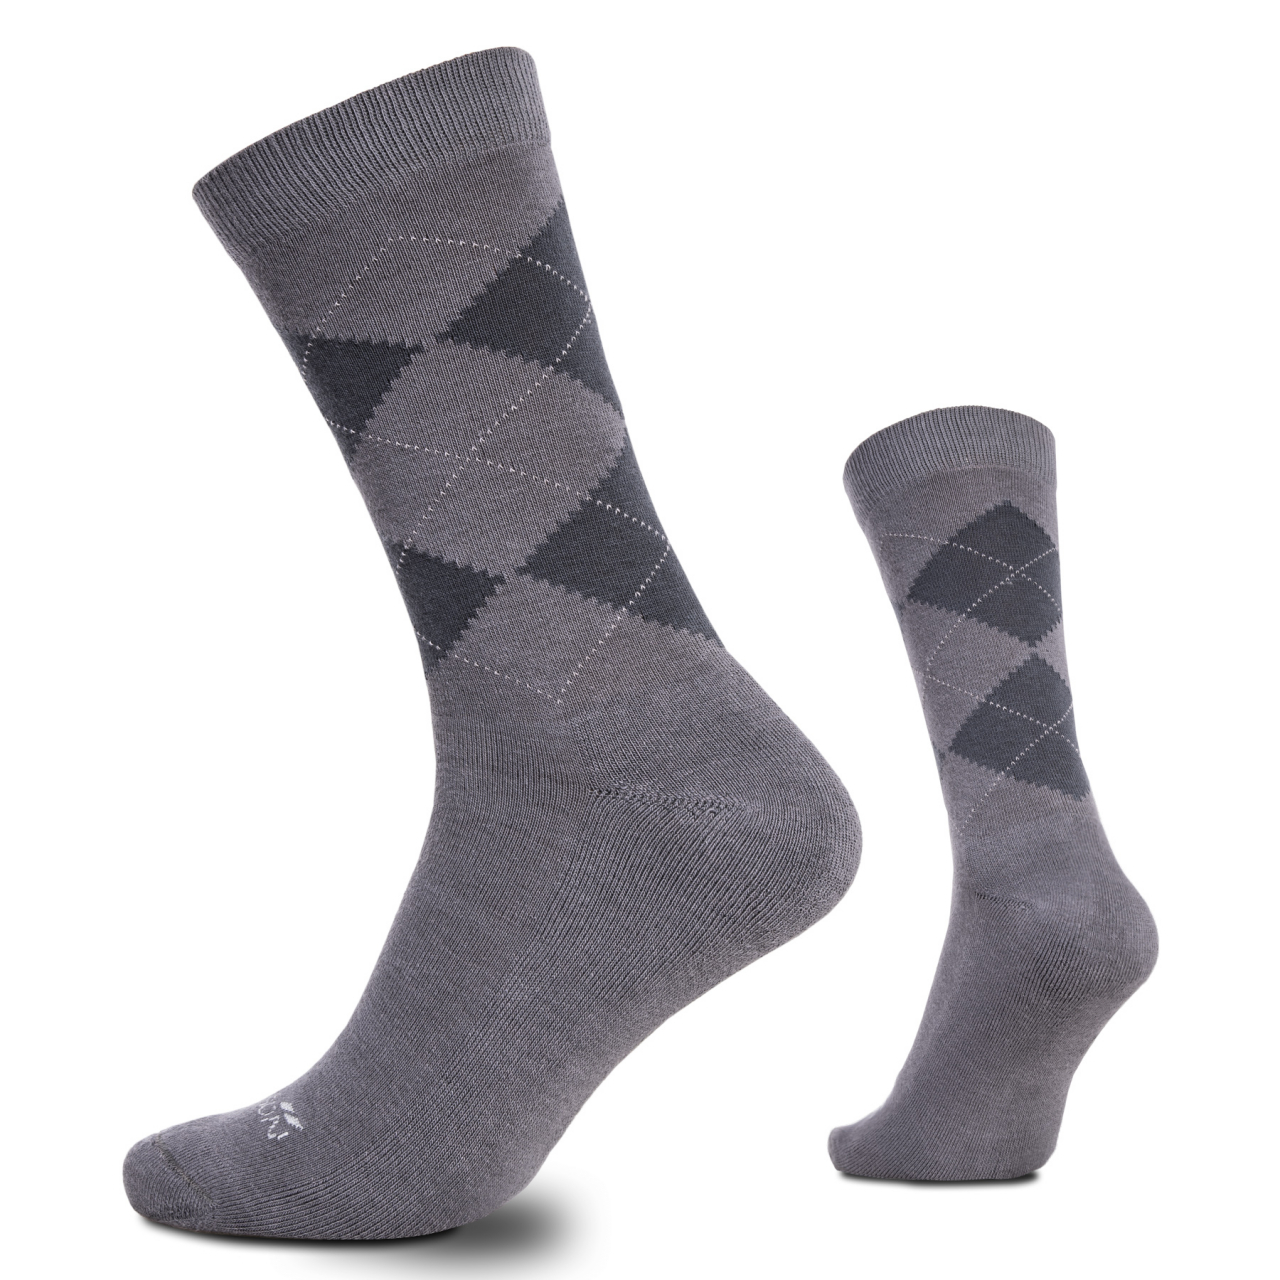 Ponožky Pentagon Phineas - šedé, 45-47